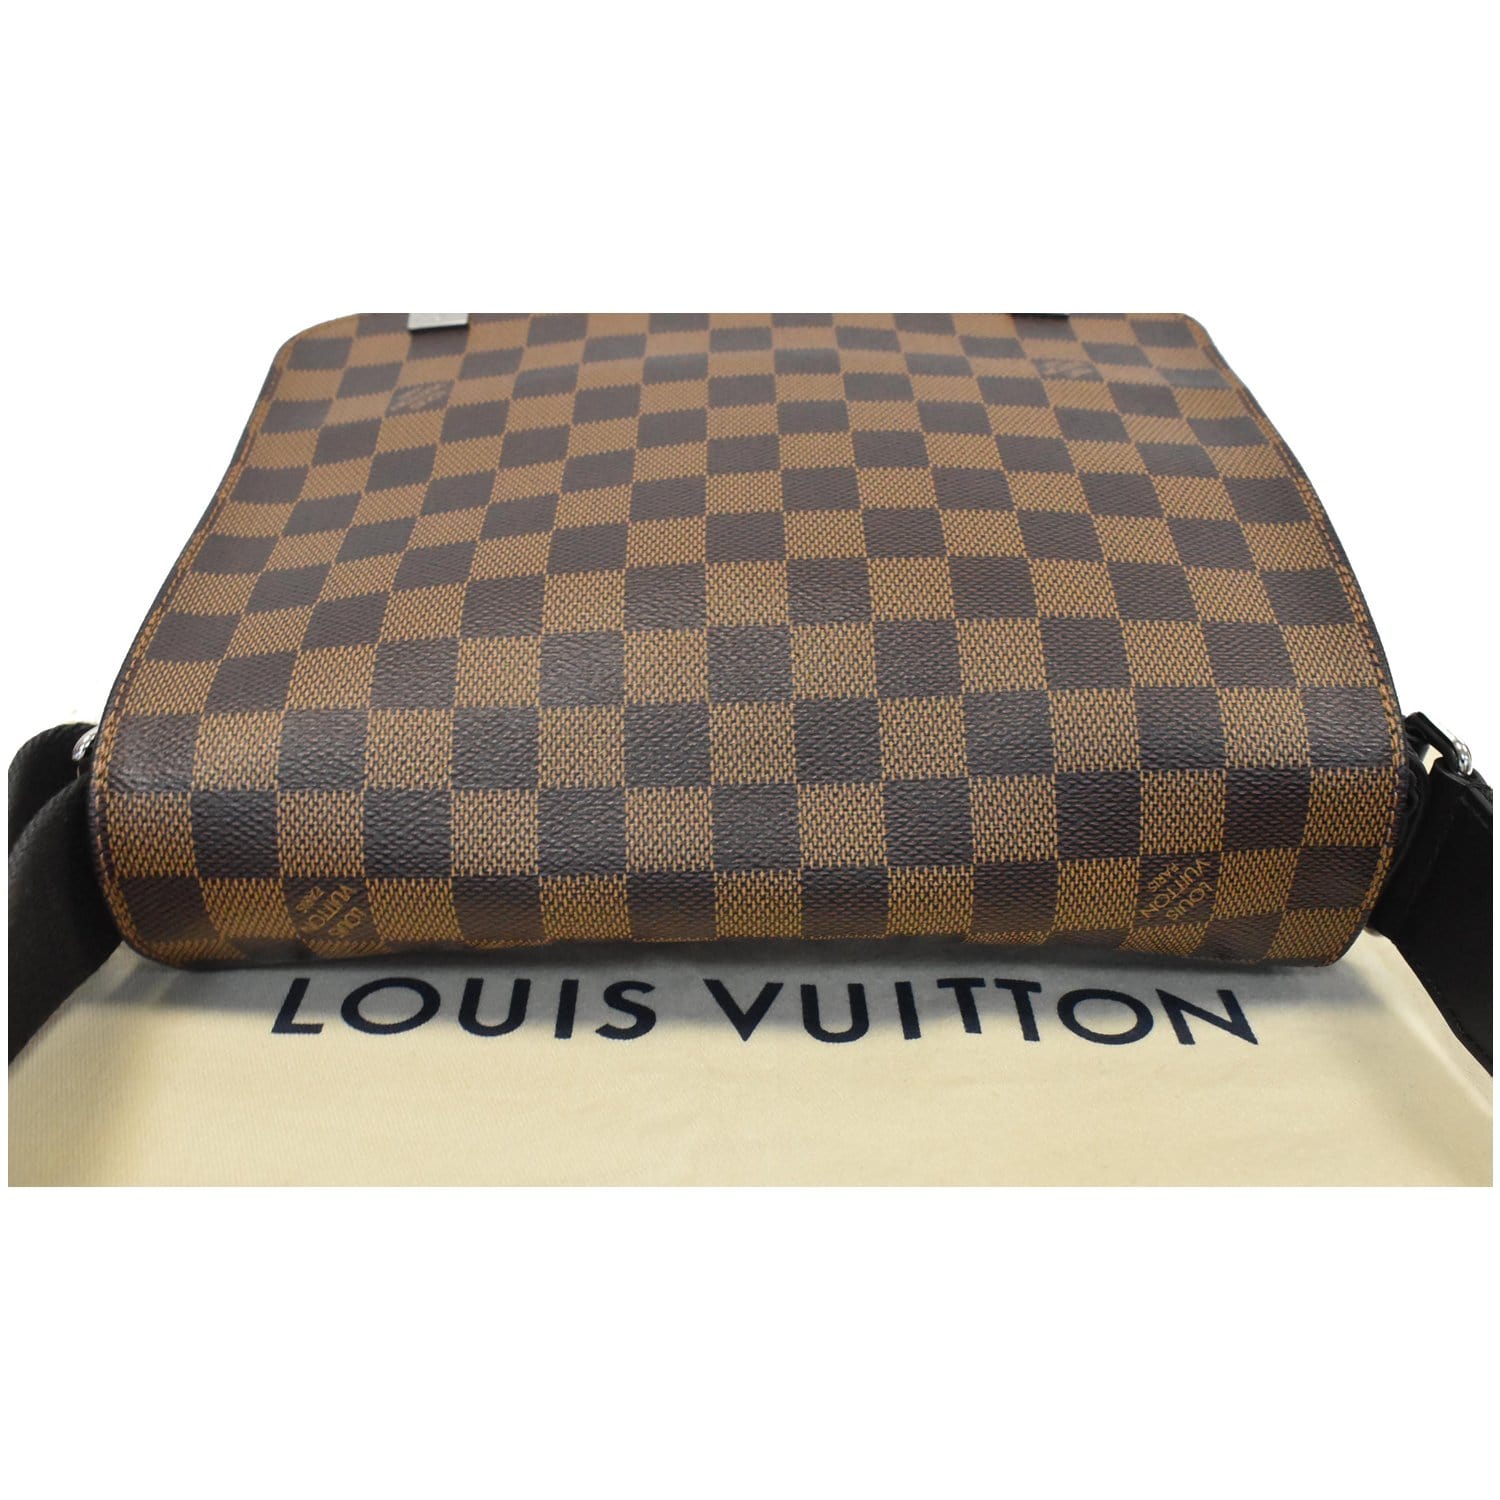 Louis Vuitton District PM Messenger Bag👍🏻, Comes with